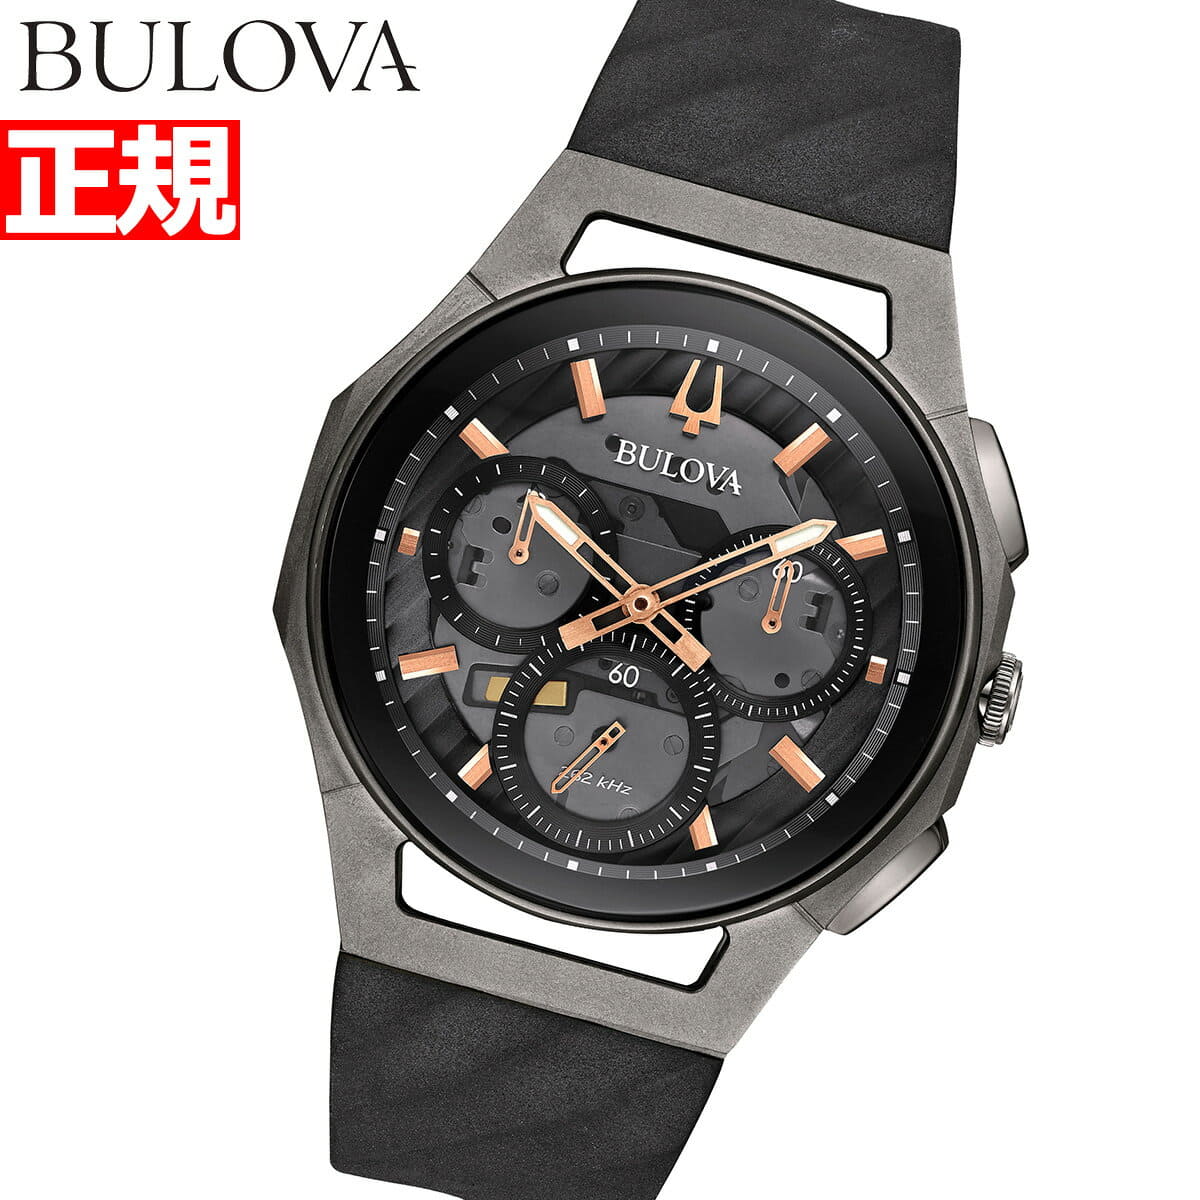 New]Bulova 98A162 Store watch - chronograph CURV curve FORWARD BE men BULOVA